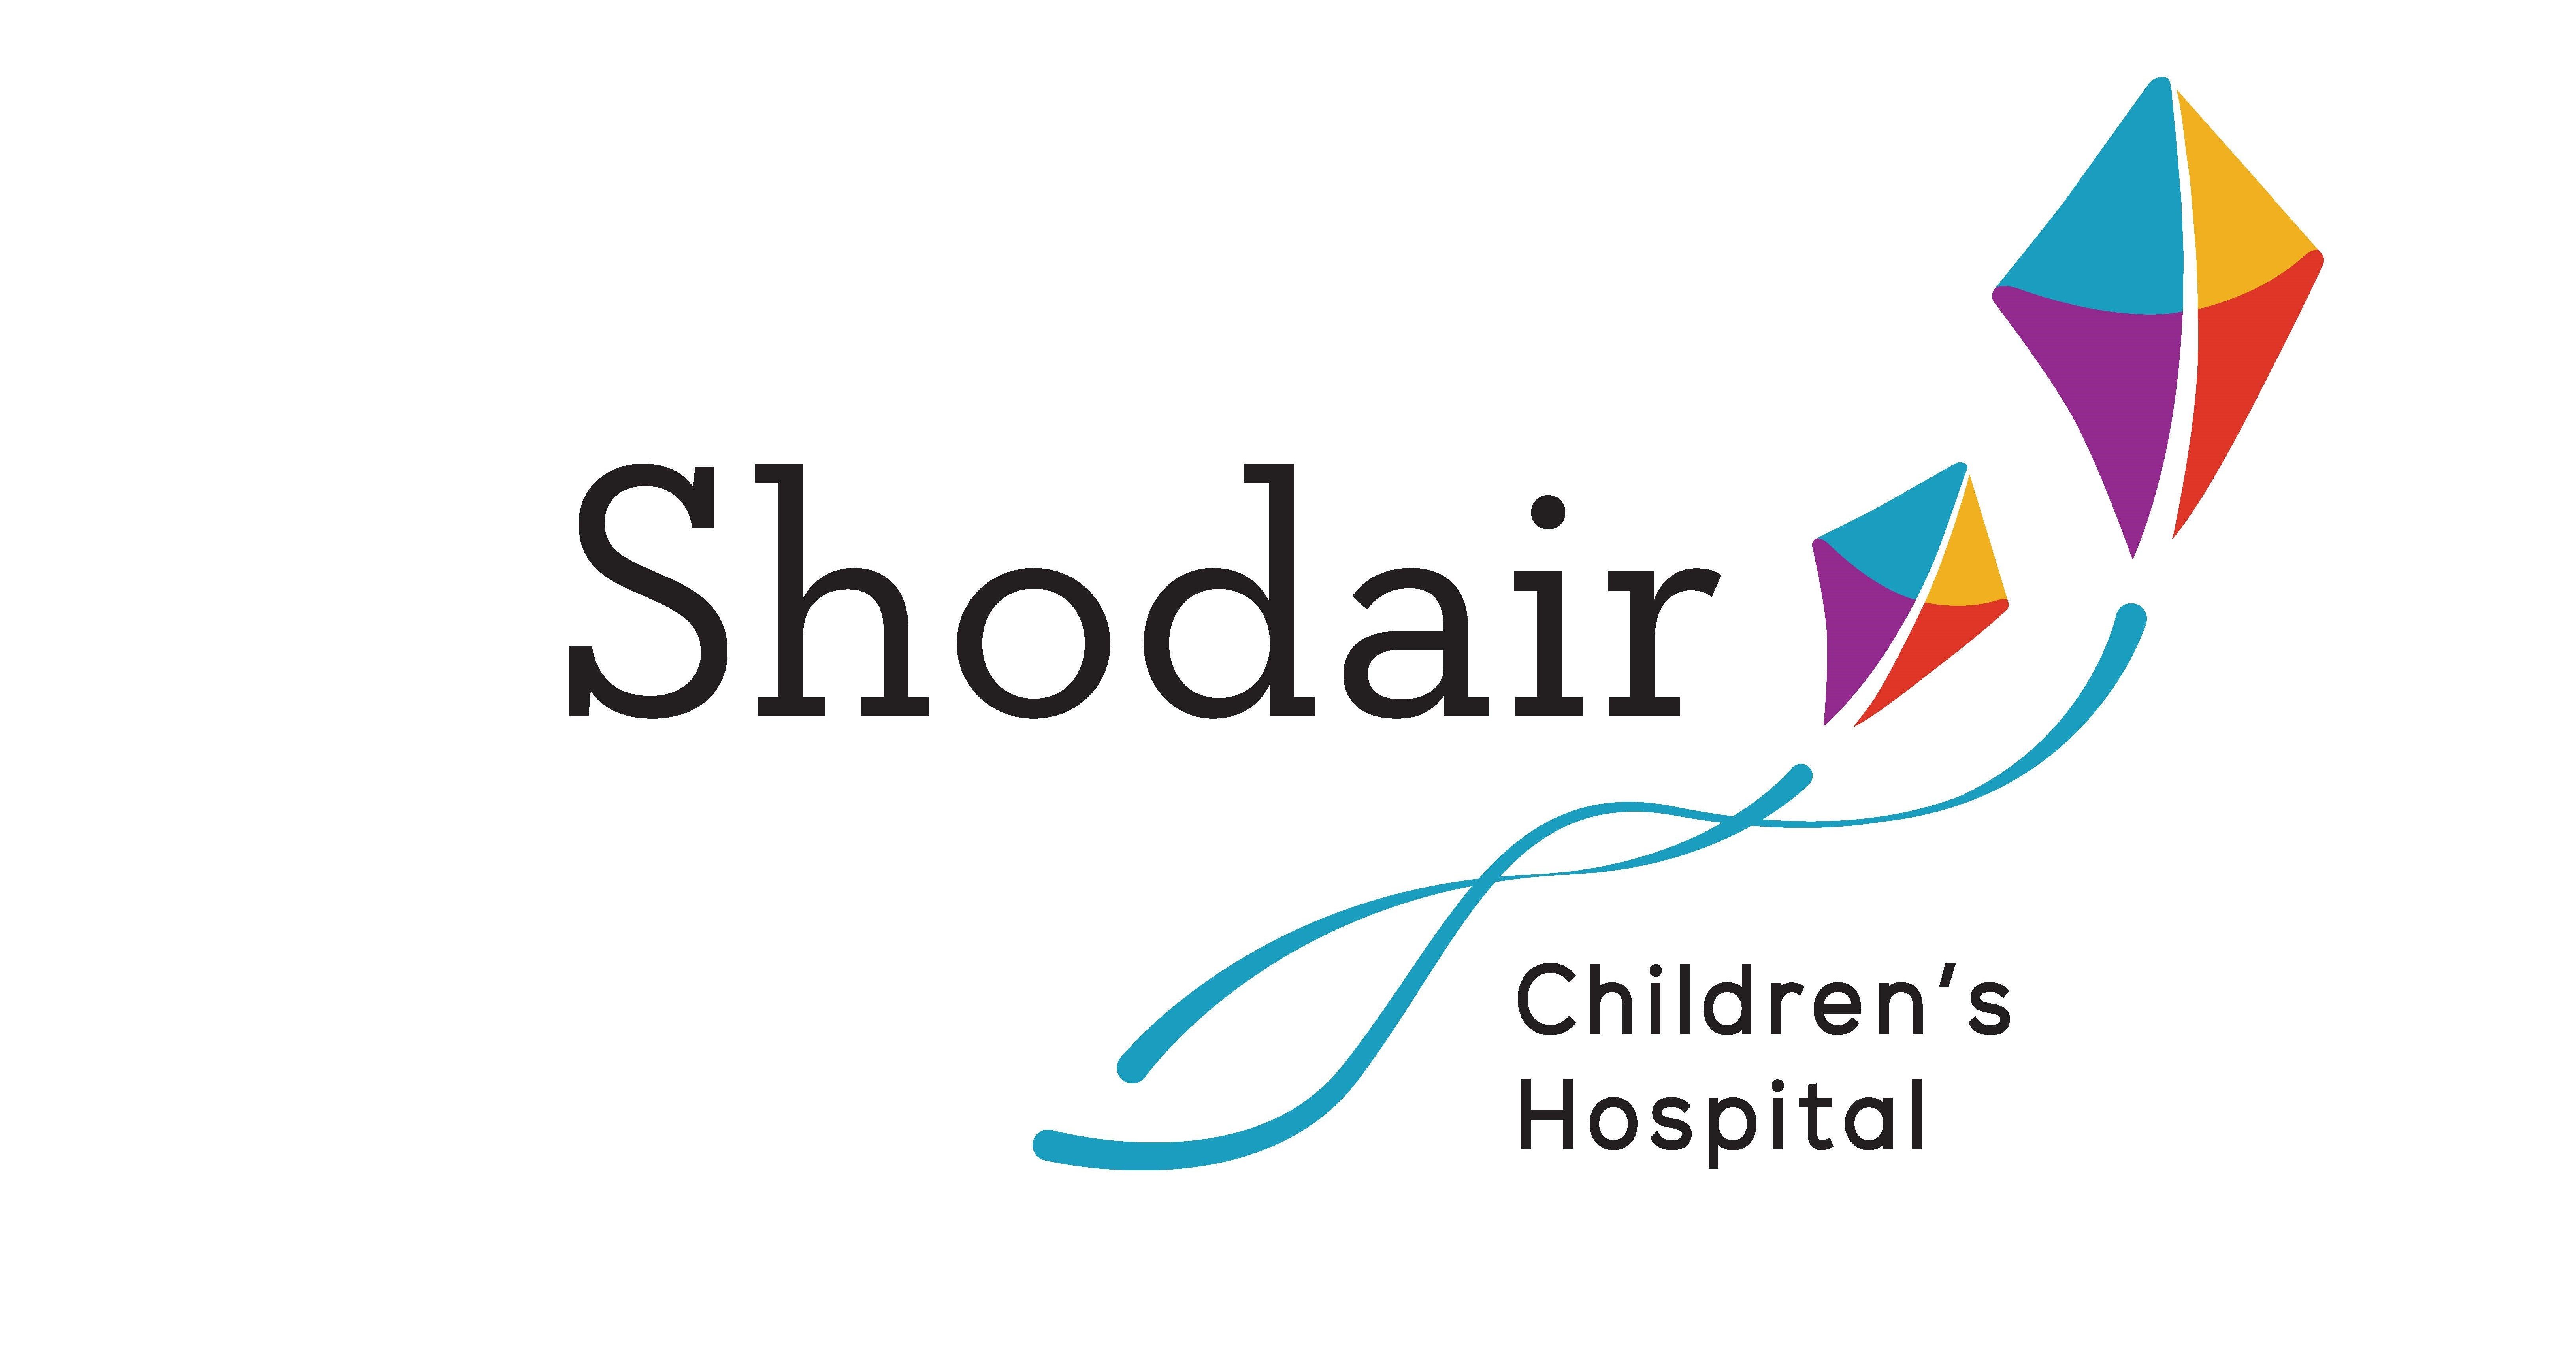 Shodair Children's Hospital